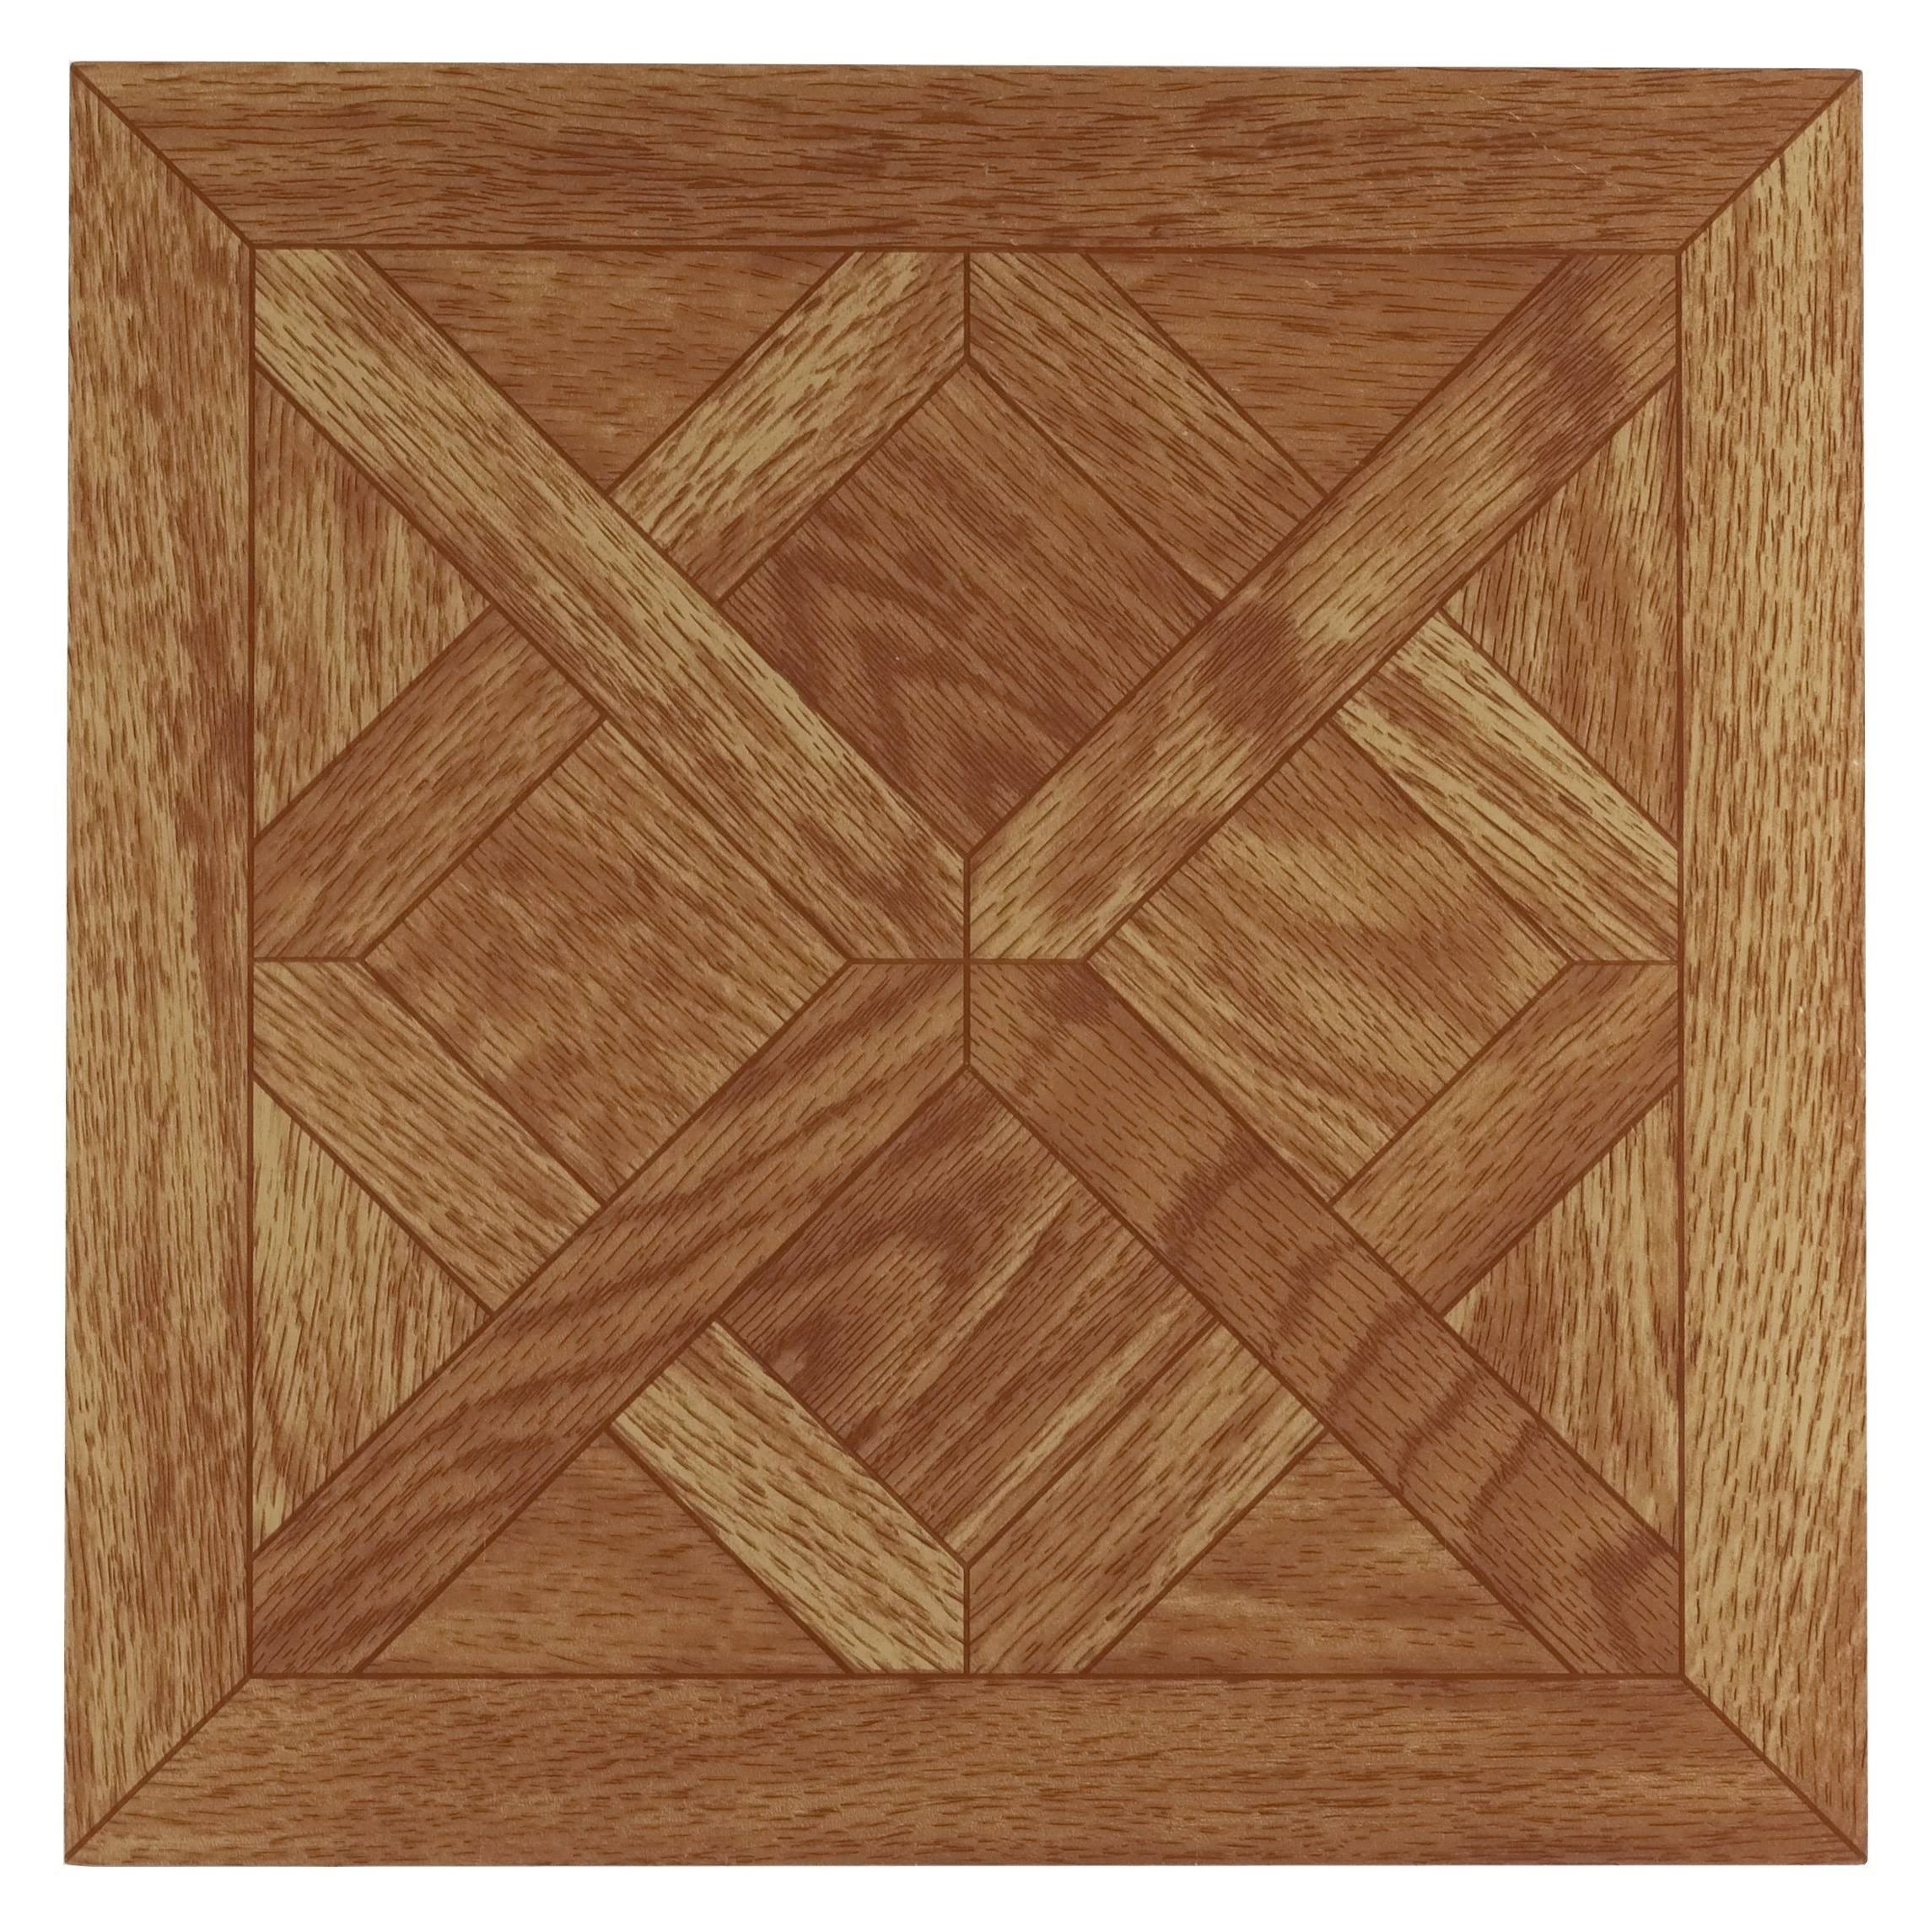 Achim Nexus Self Adhesive Classic Parquet Vinyl Floor Tile - Oak, Brown, 12in x 12in